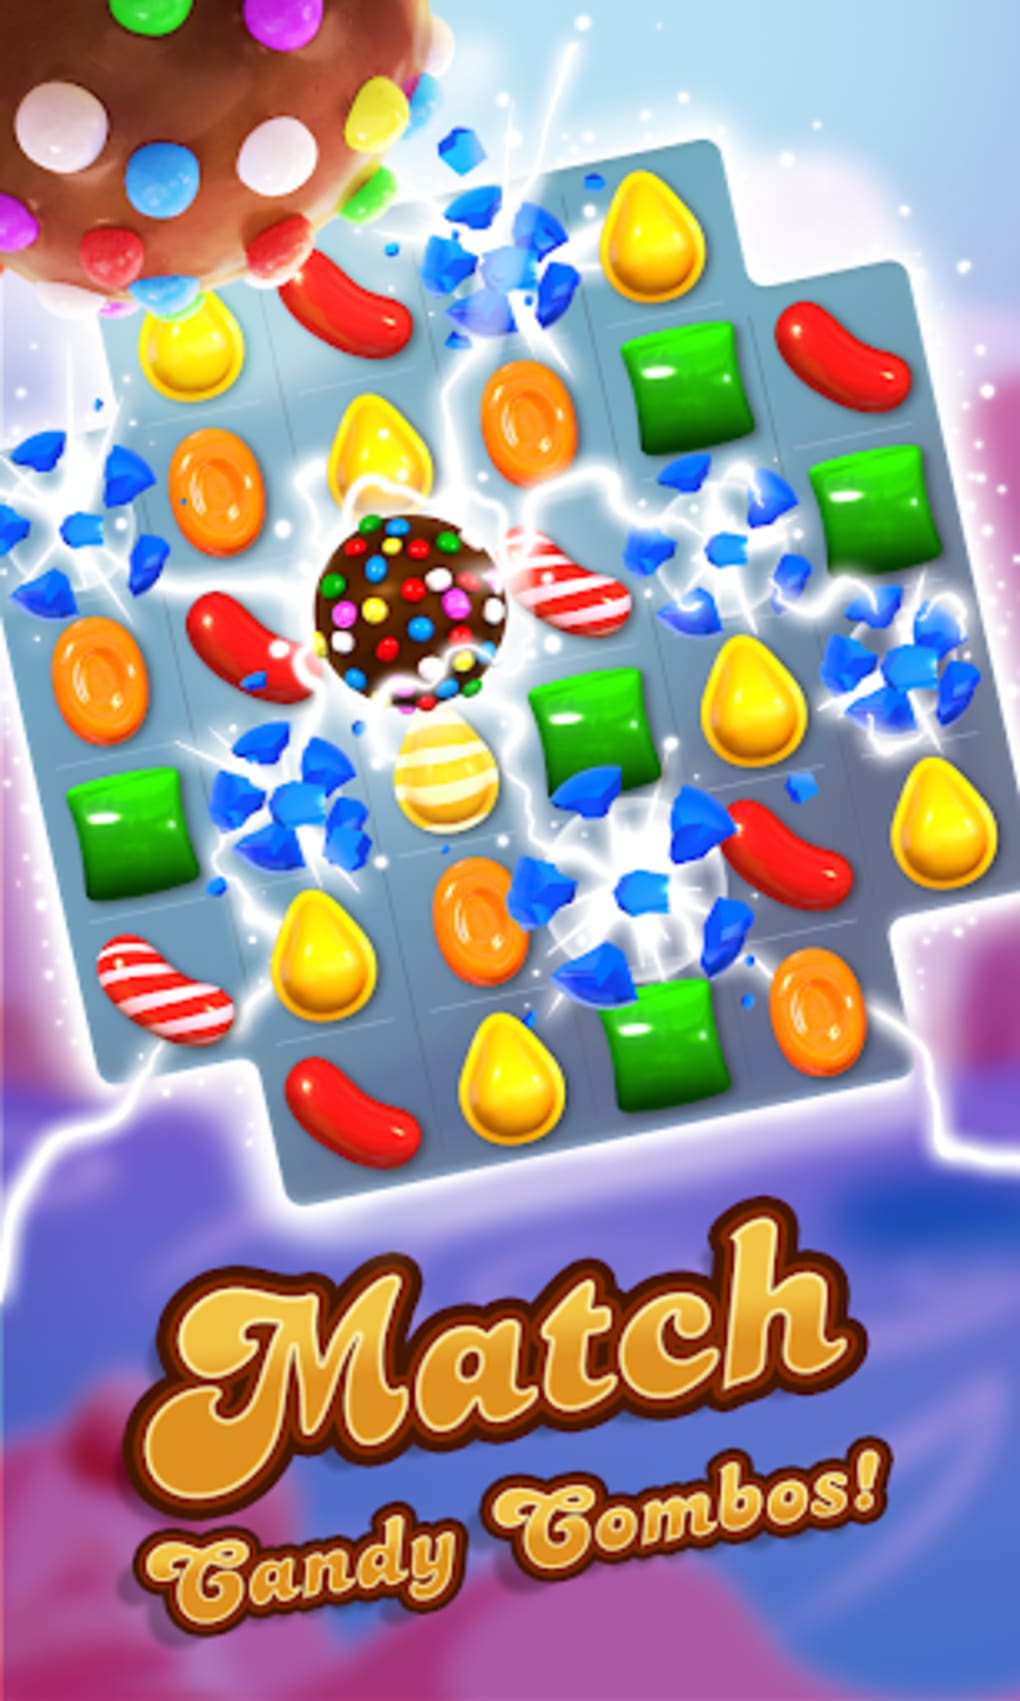 Candy Crush Saga 1.176.0.2 für Android downloaden - Filehippo.com